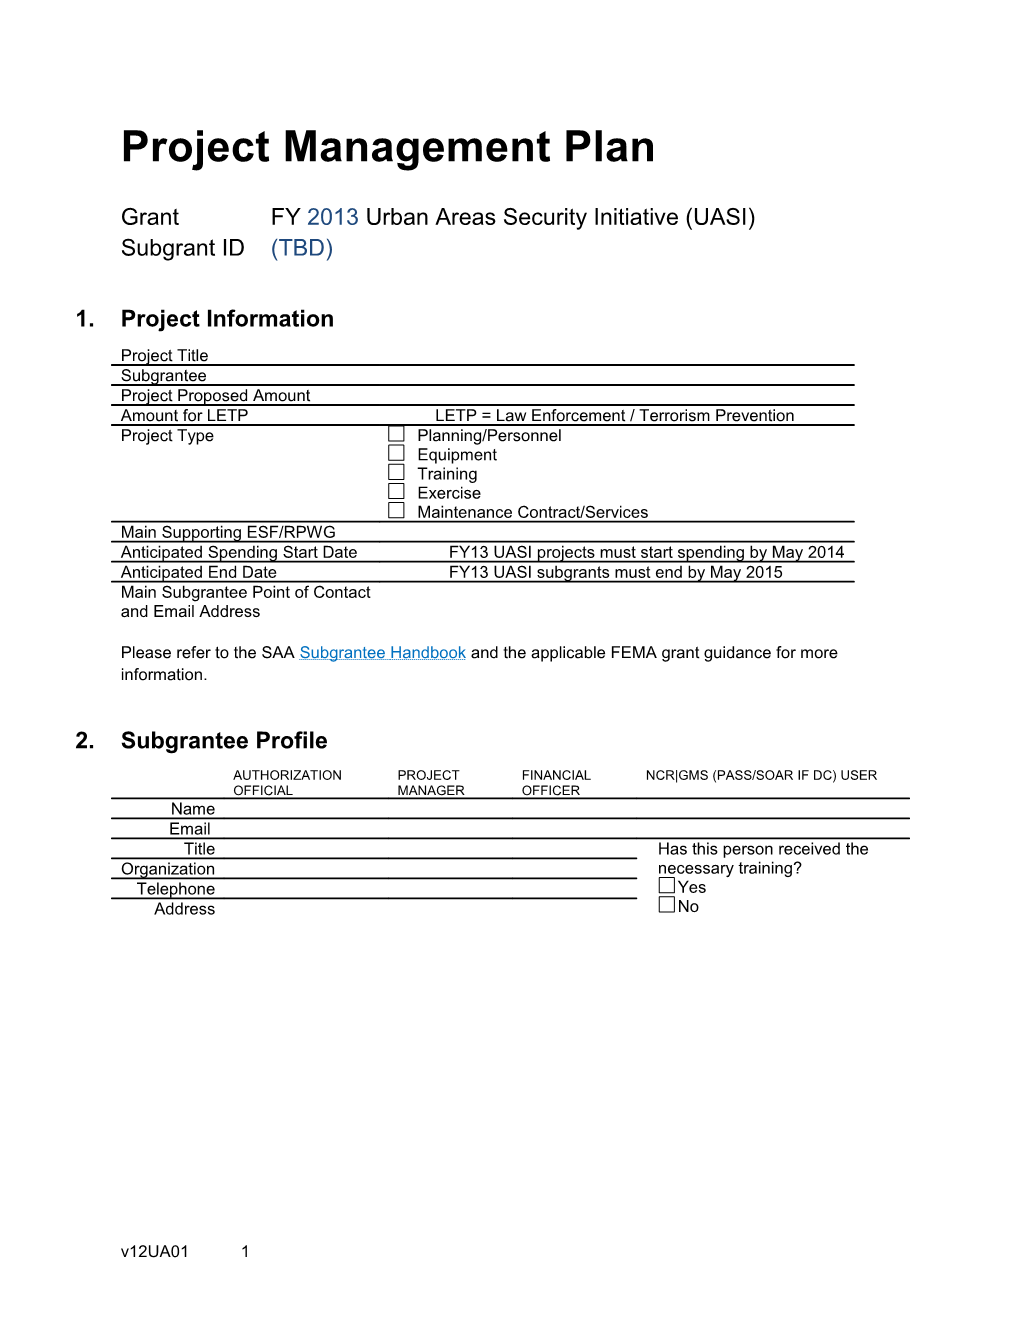 Project Management Plan UASI